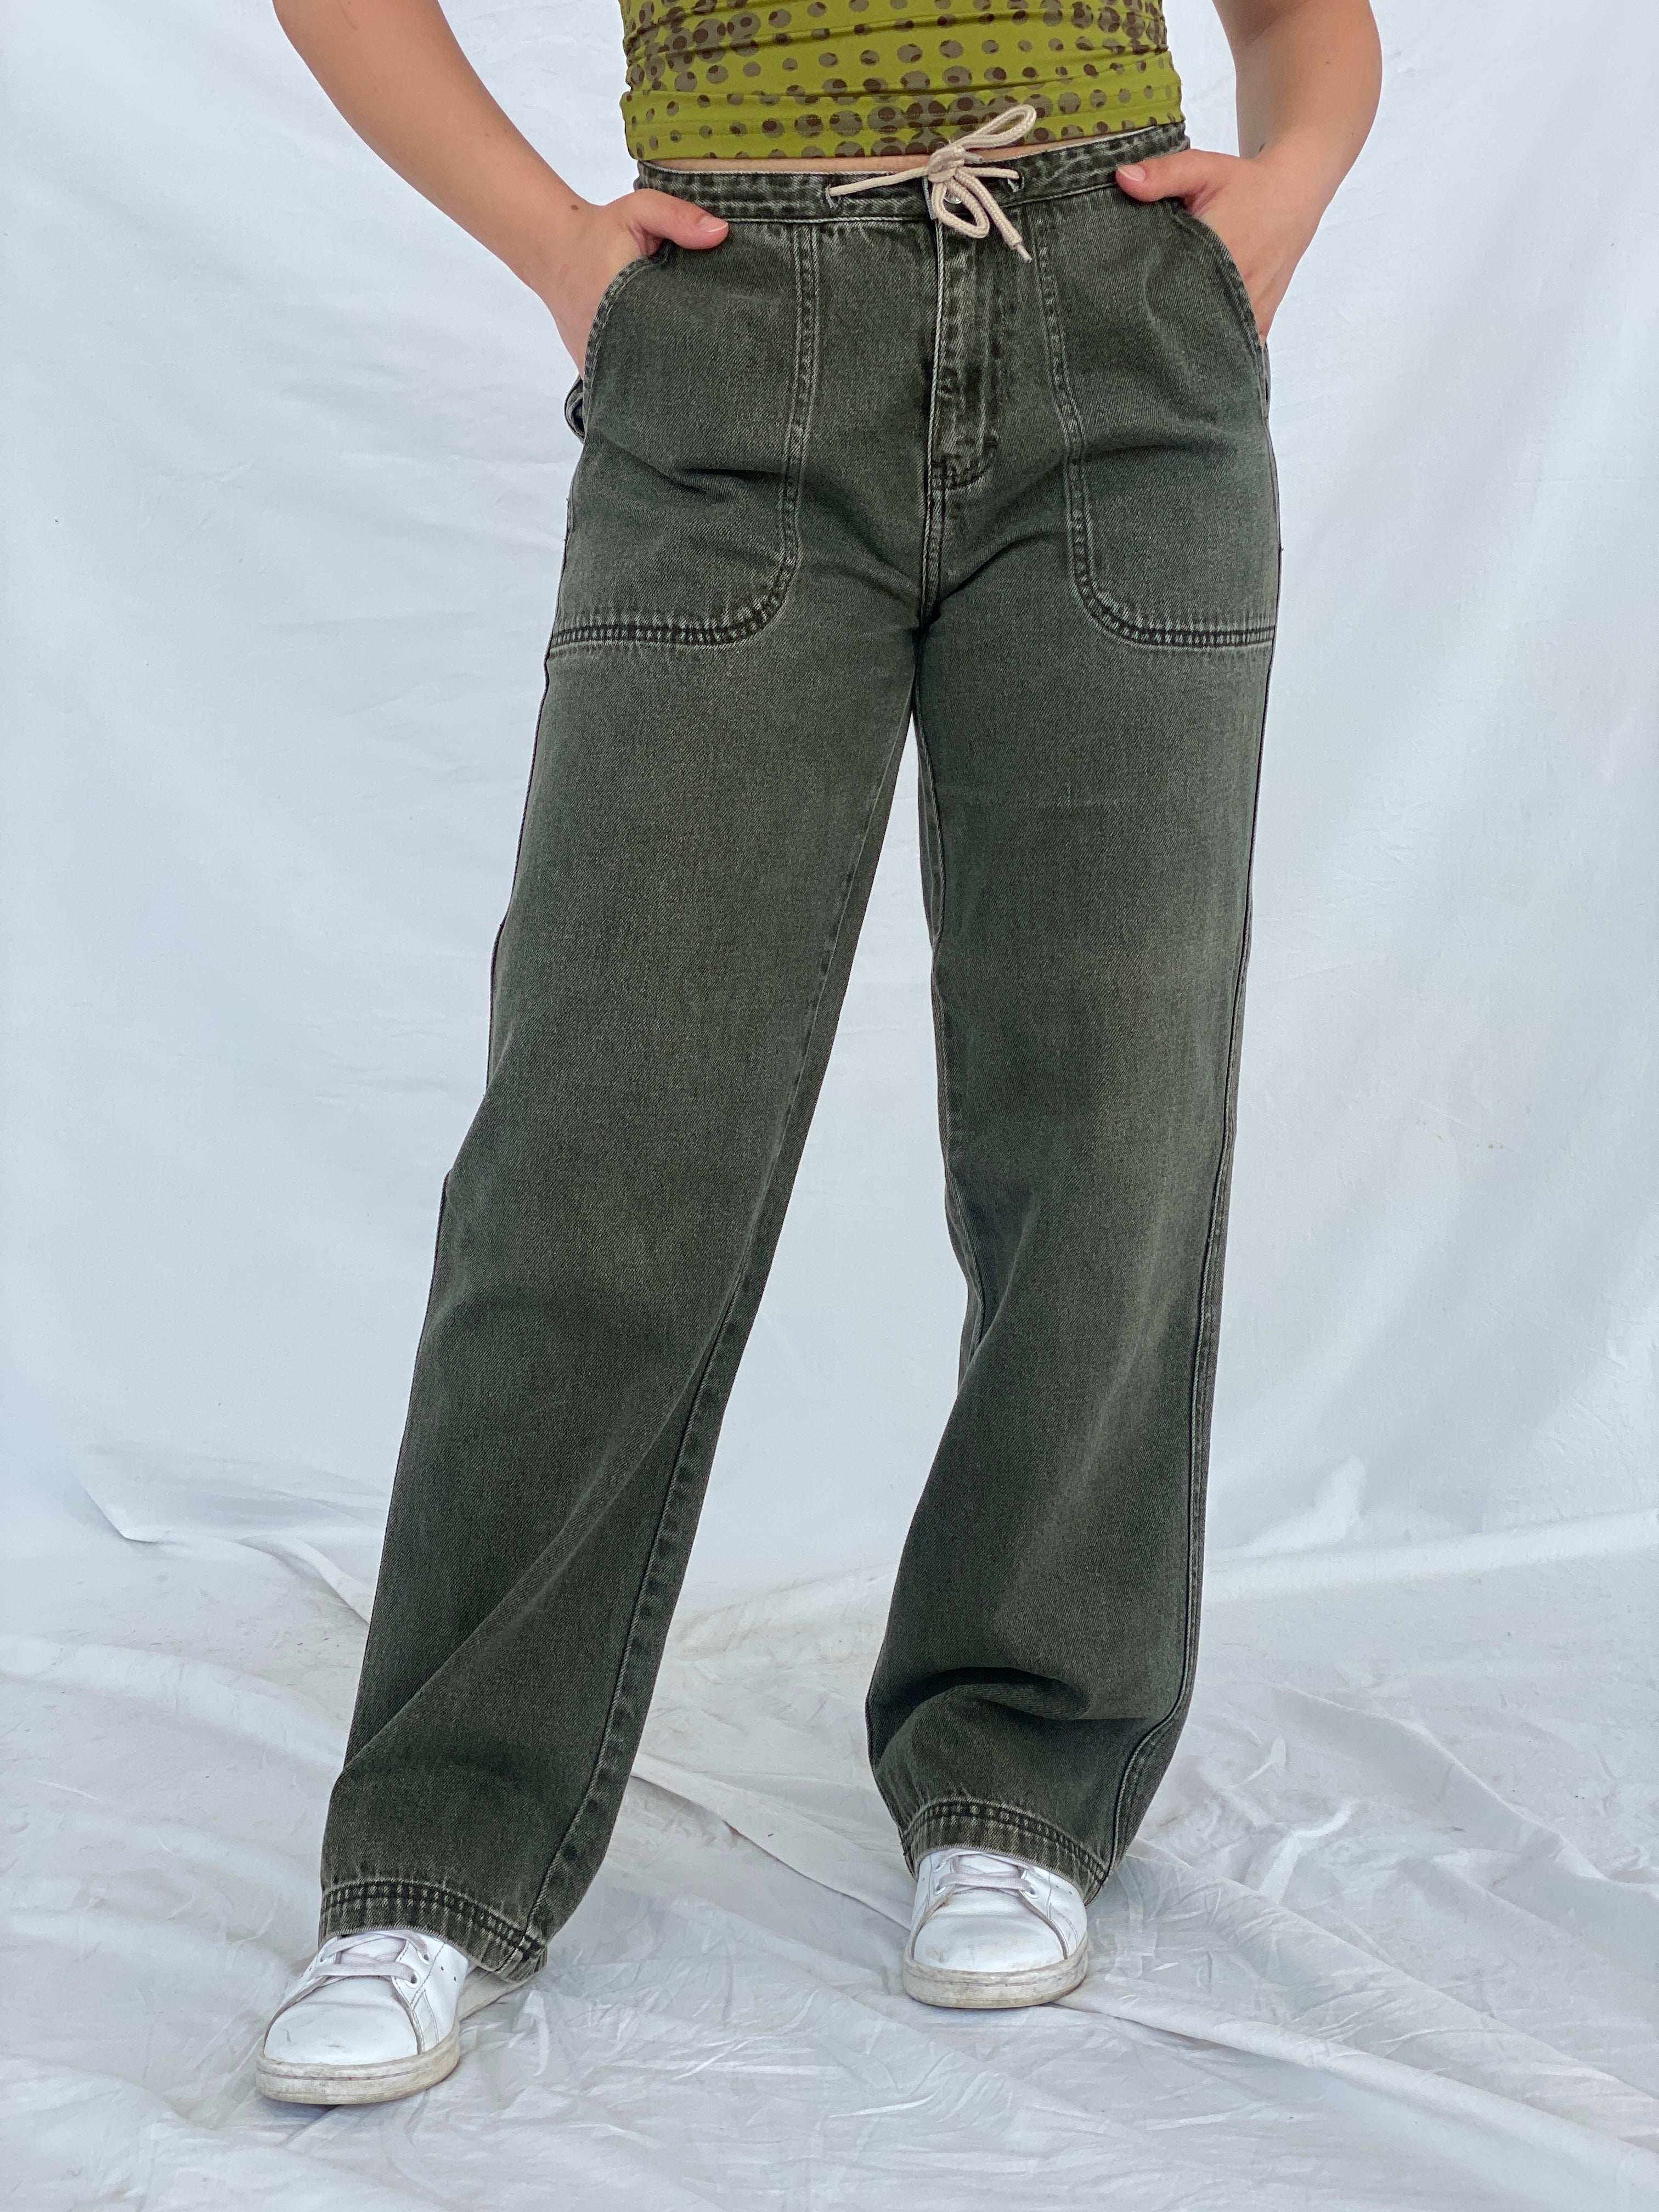 Vintage Y2K Tommy Hilfiger Jeans - Size 8 - Balagan Vintage Jeans 00s, jeans, Lana, NEW IN, Tommy hilfiger